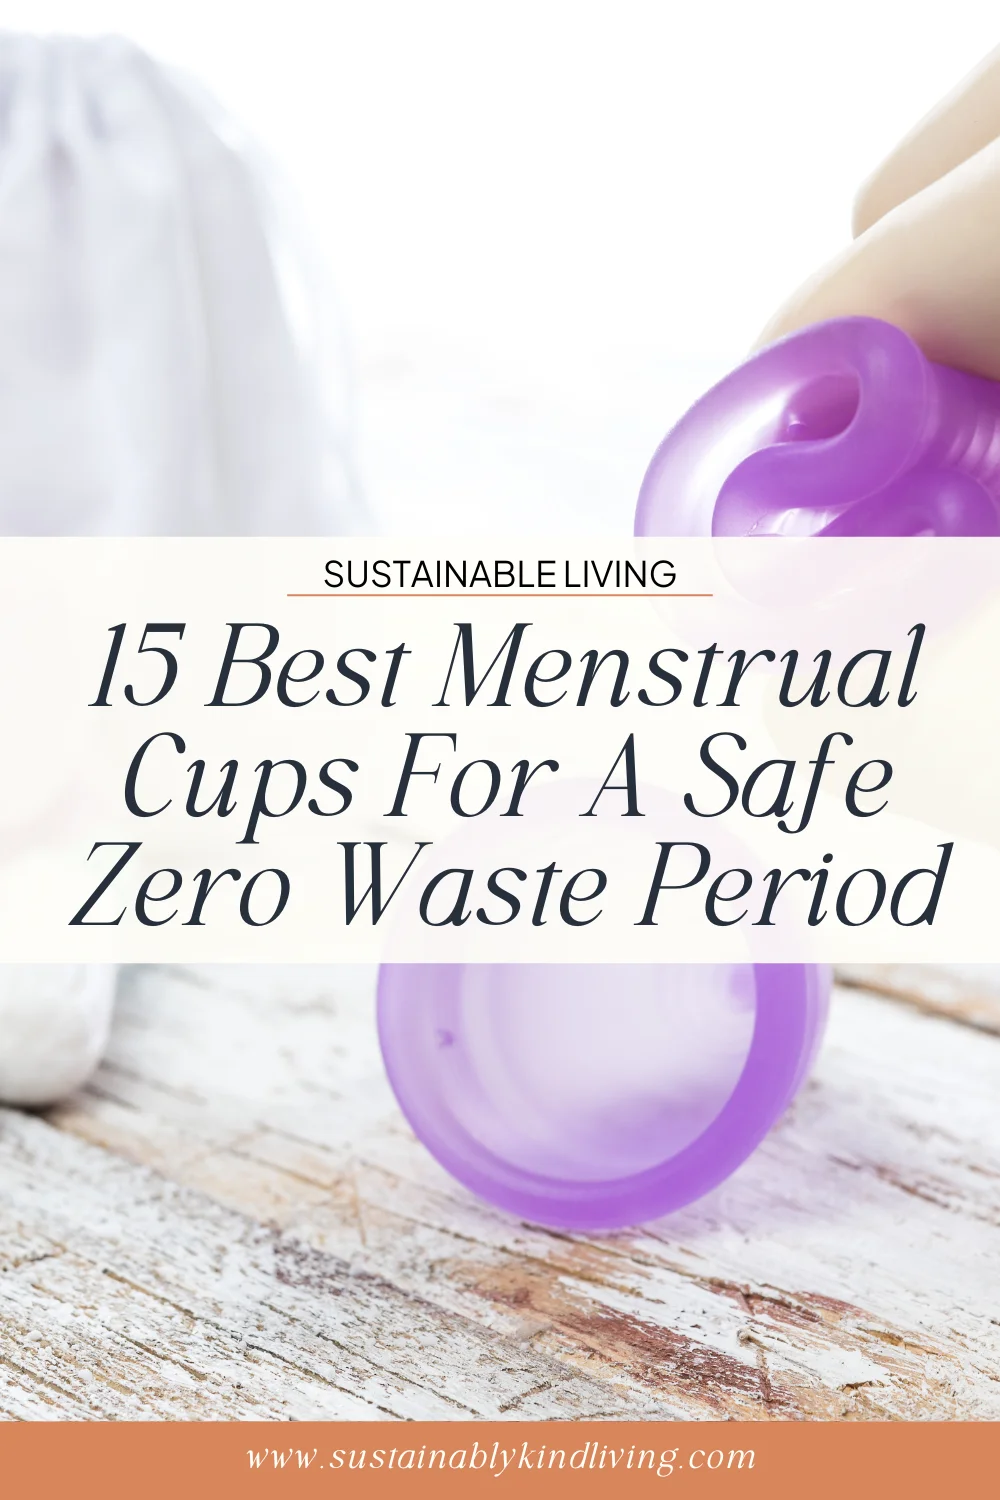 menstrual cups